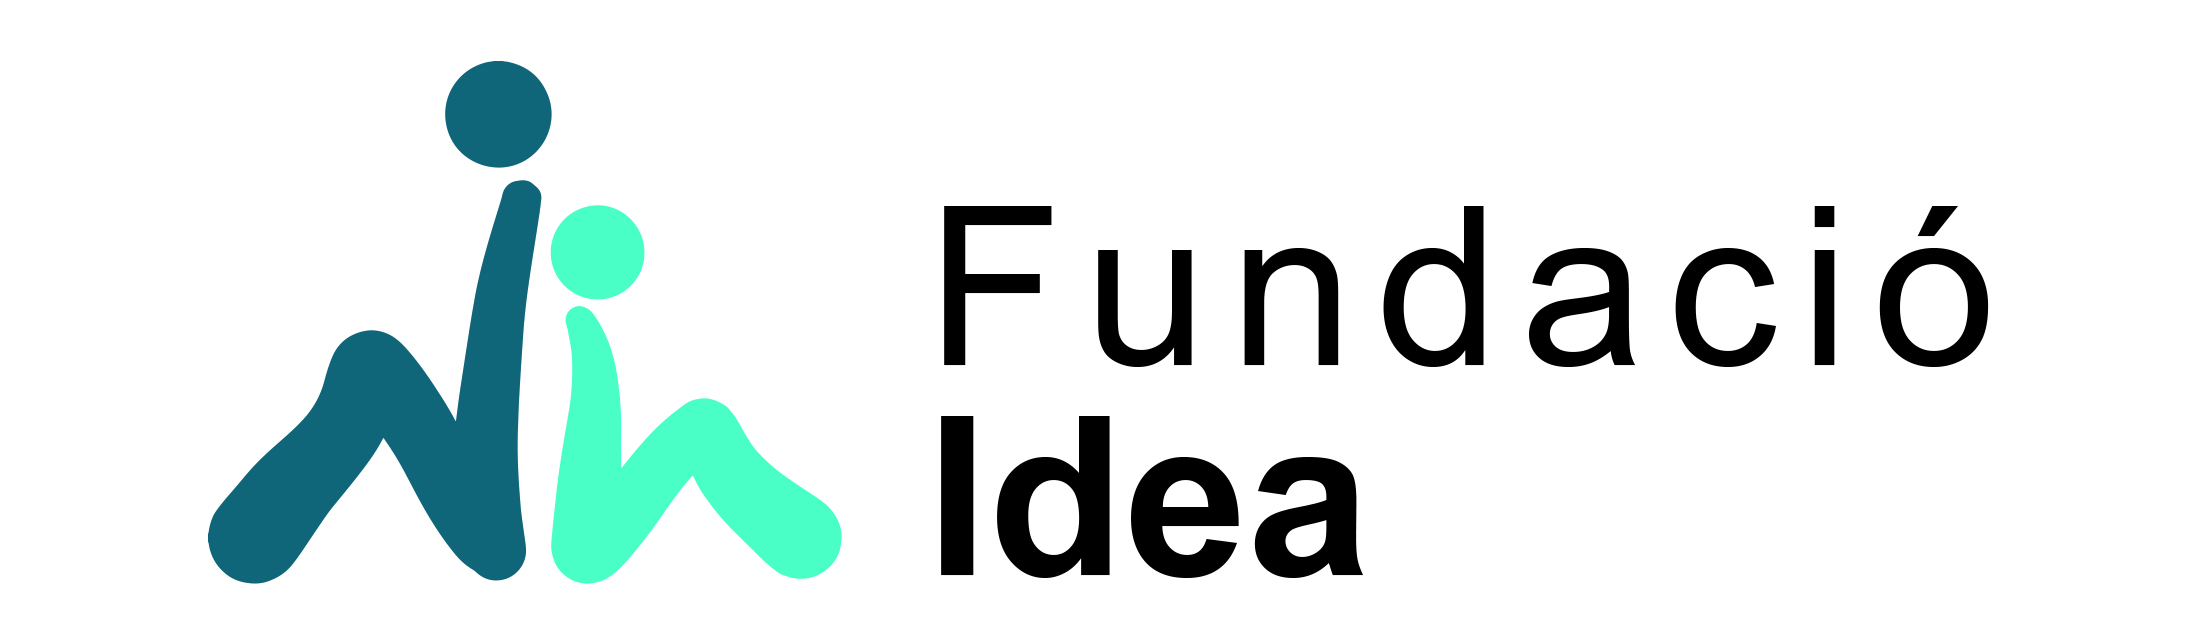 Fundació Idea Full A4 v1